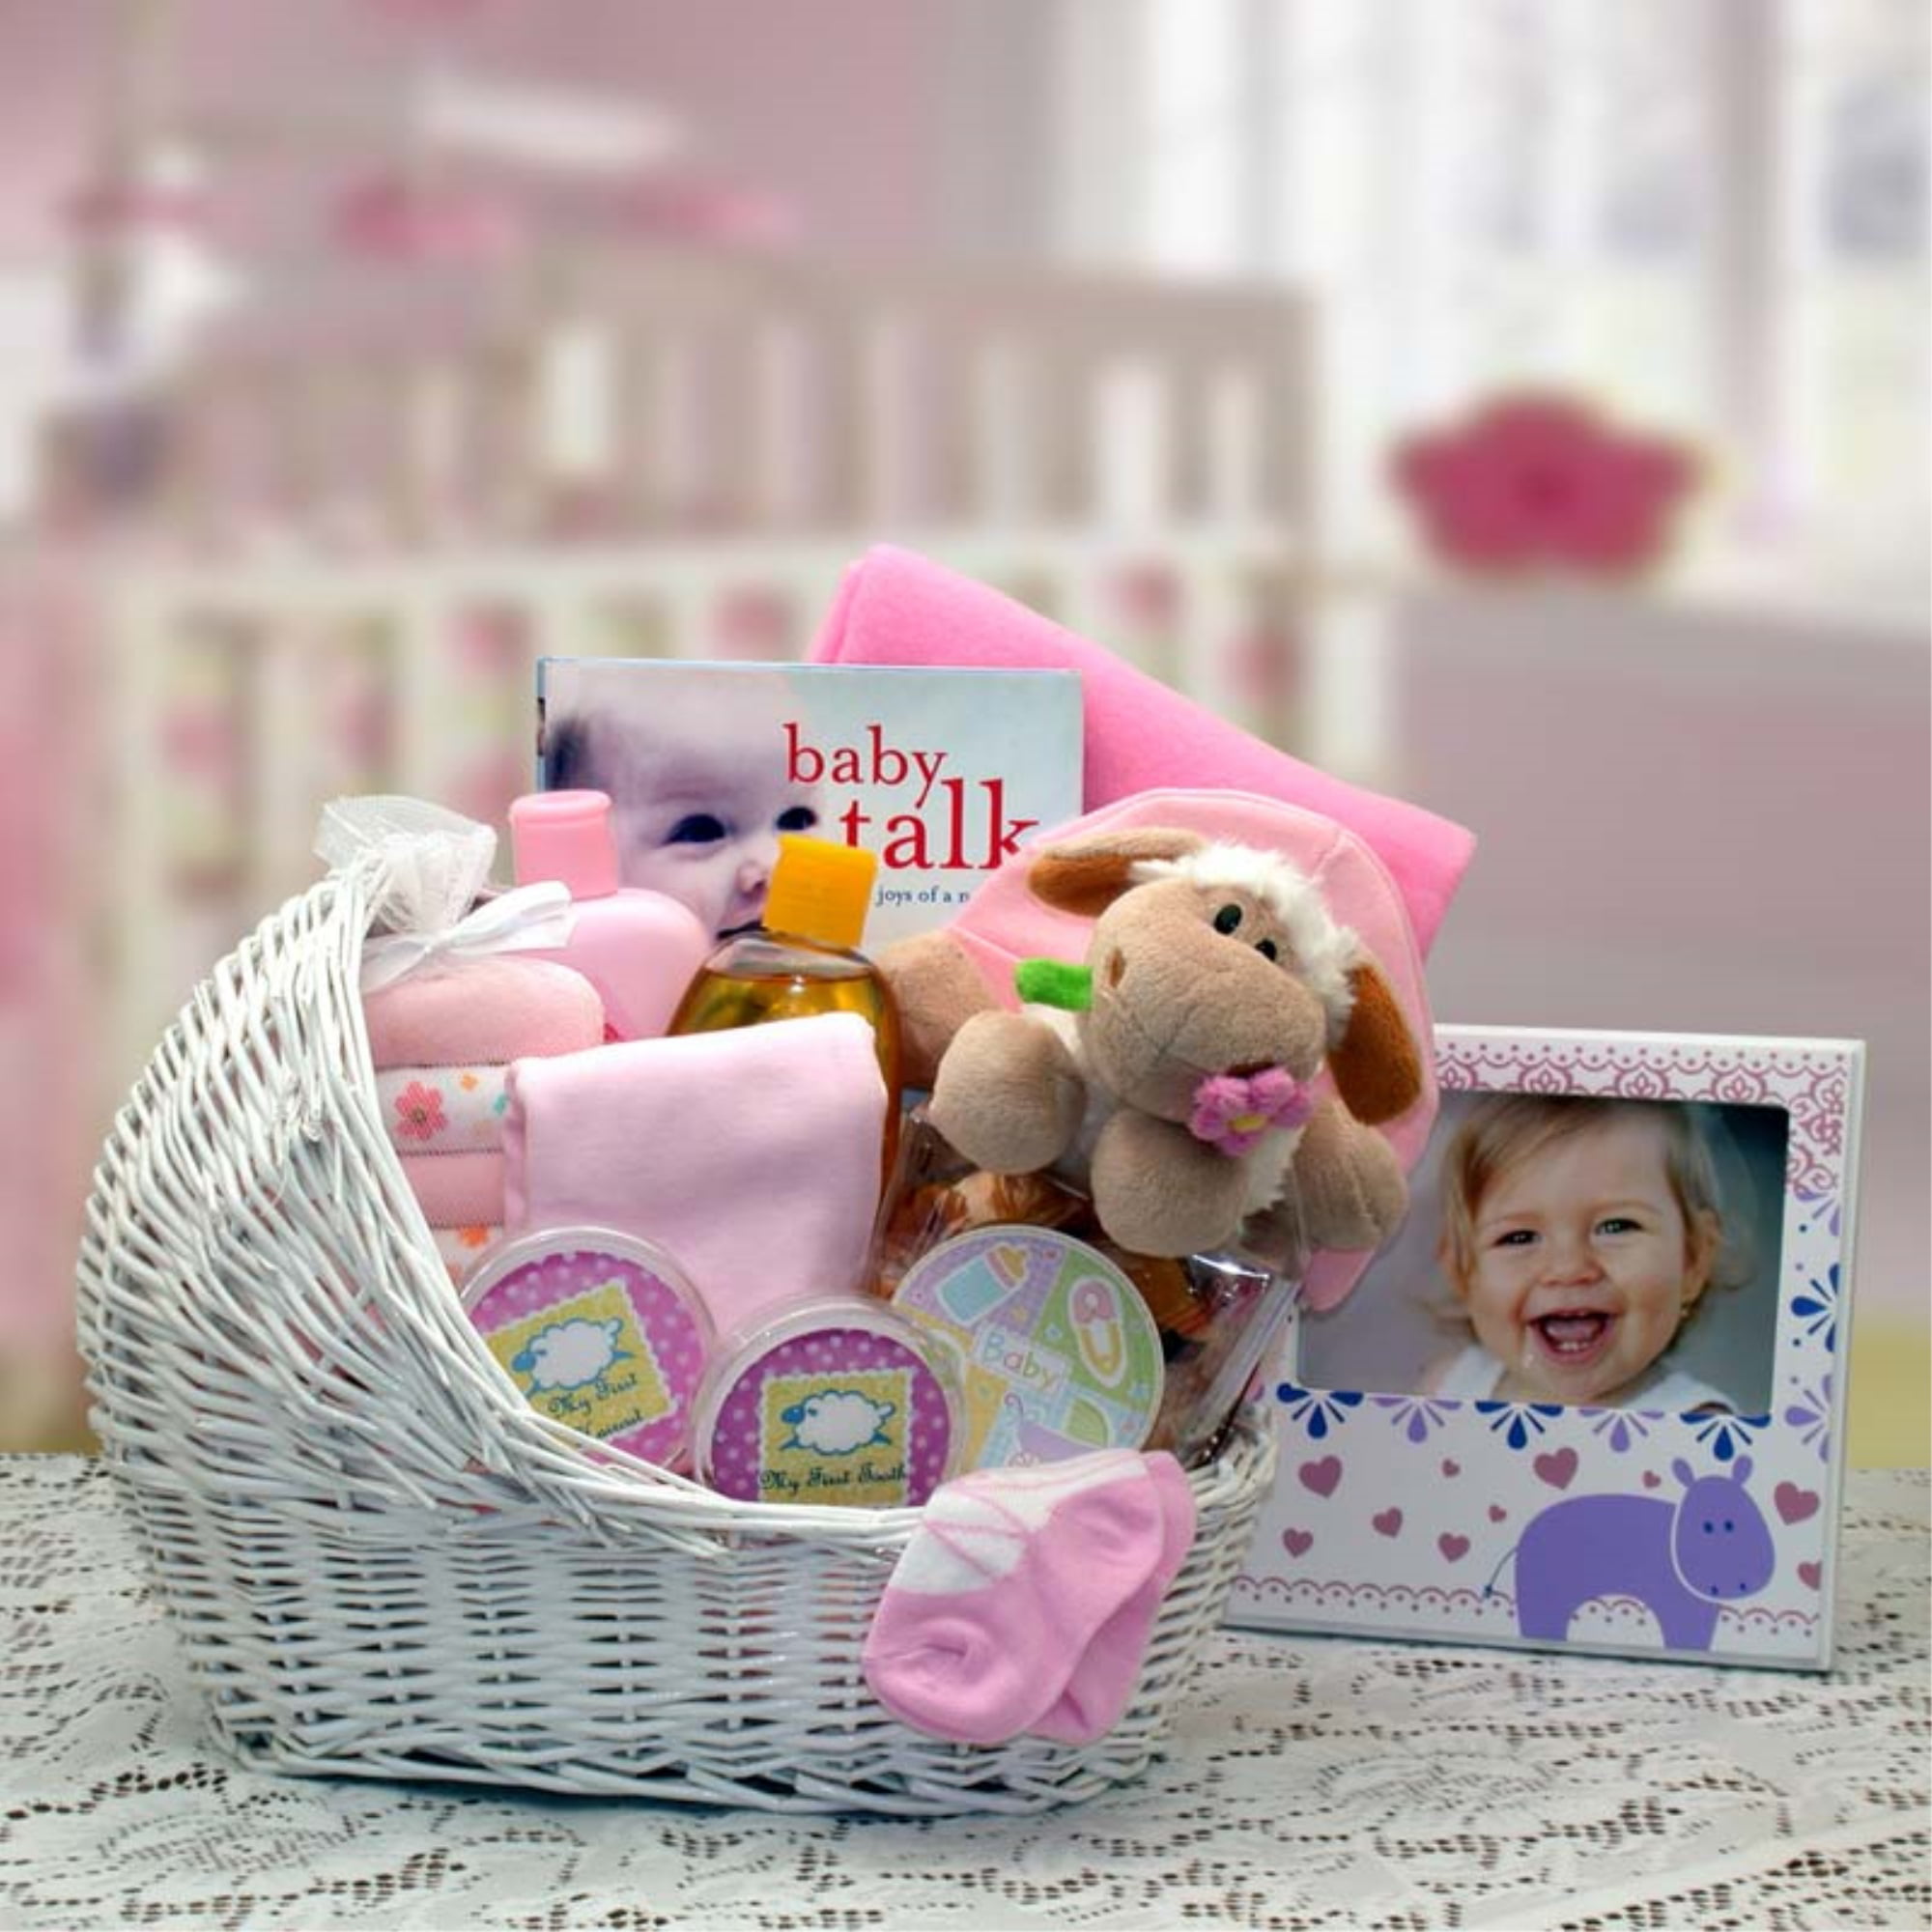 Deluxe baby gift basket/hamper inc towel 4 pce clothes set keepsake toy girl 